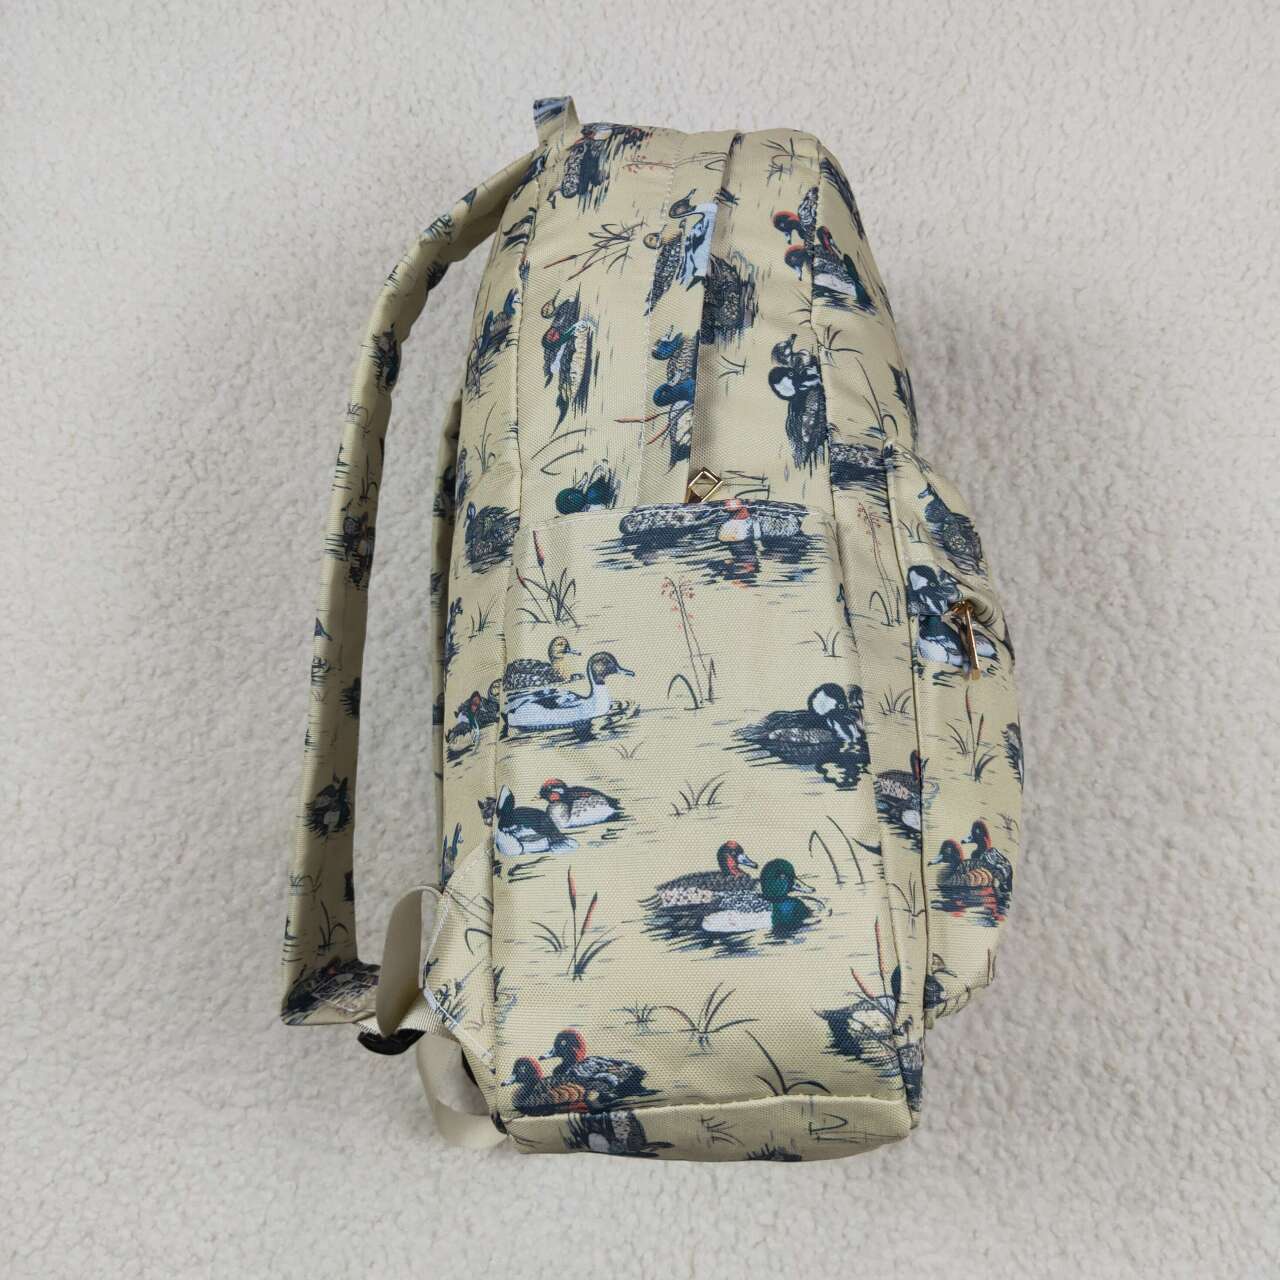 BA0198 Duck light brown backpack